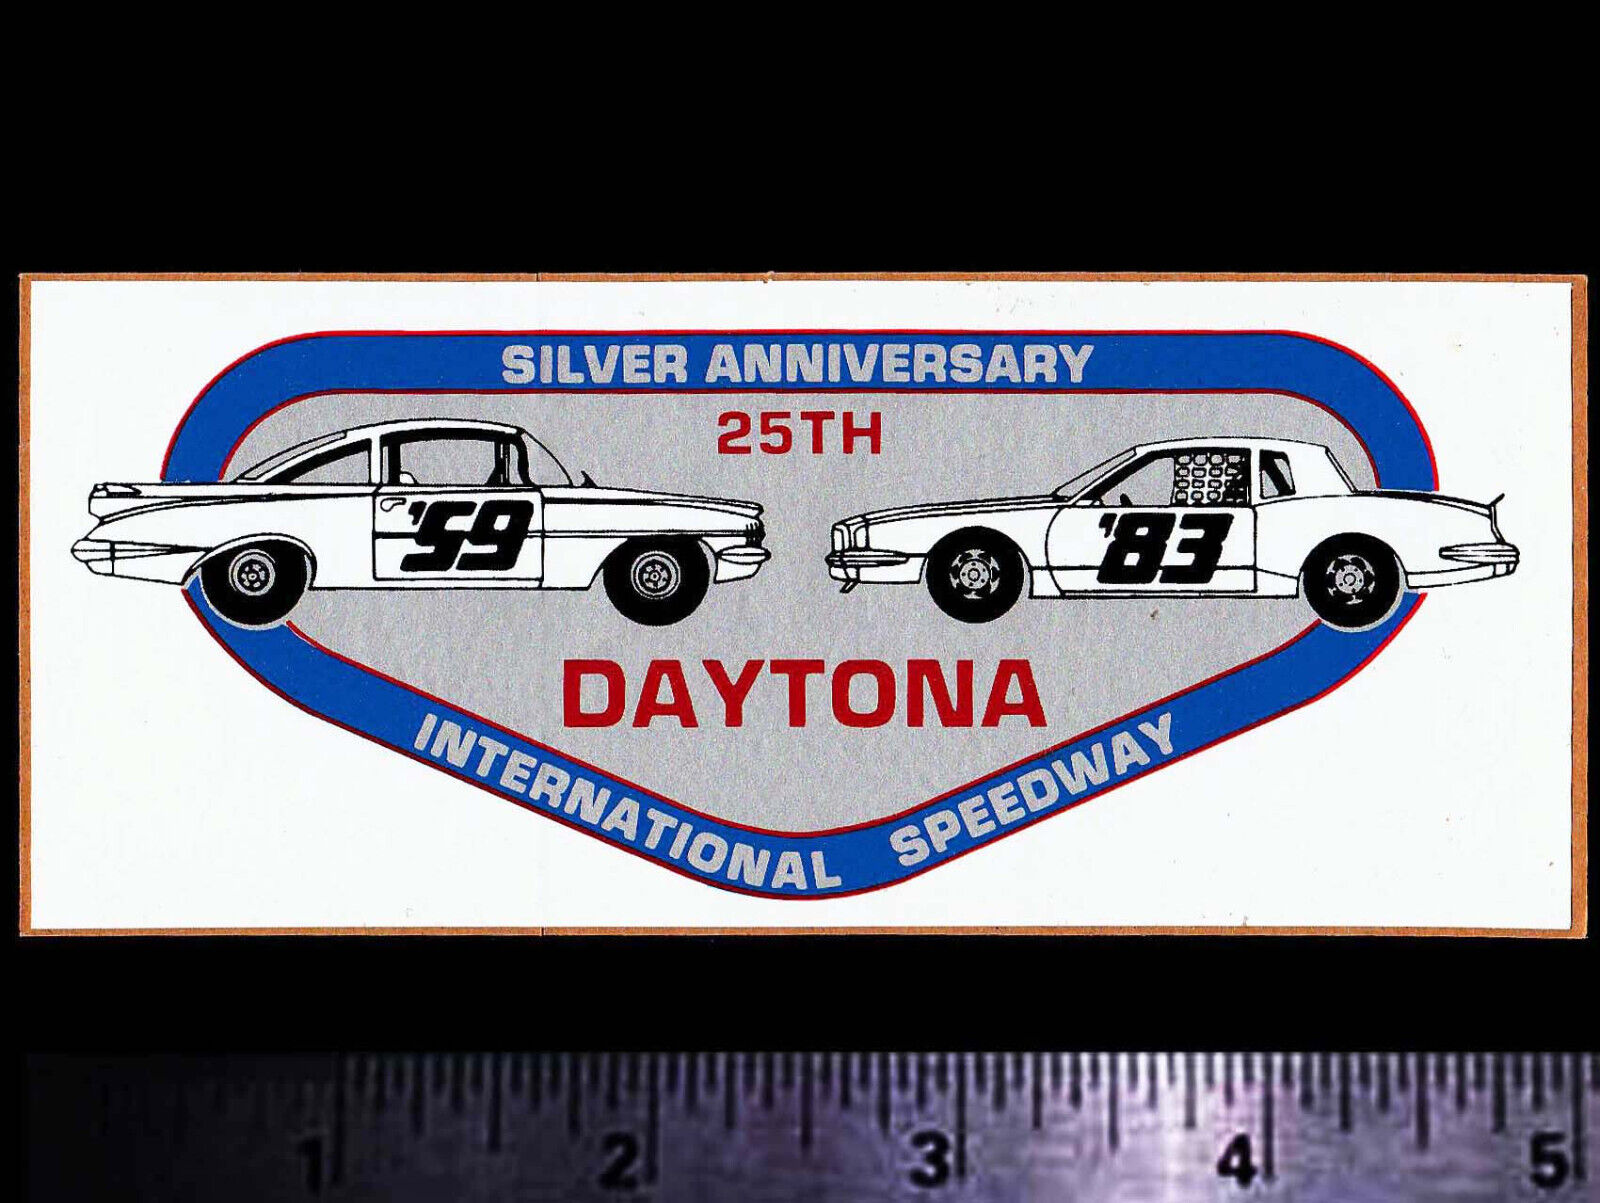 DAYTONA Speedway 1959-1983 - Original Vintage Racing Decal/Sticker NASCAR Petty